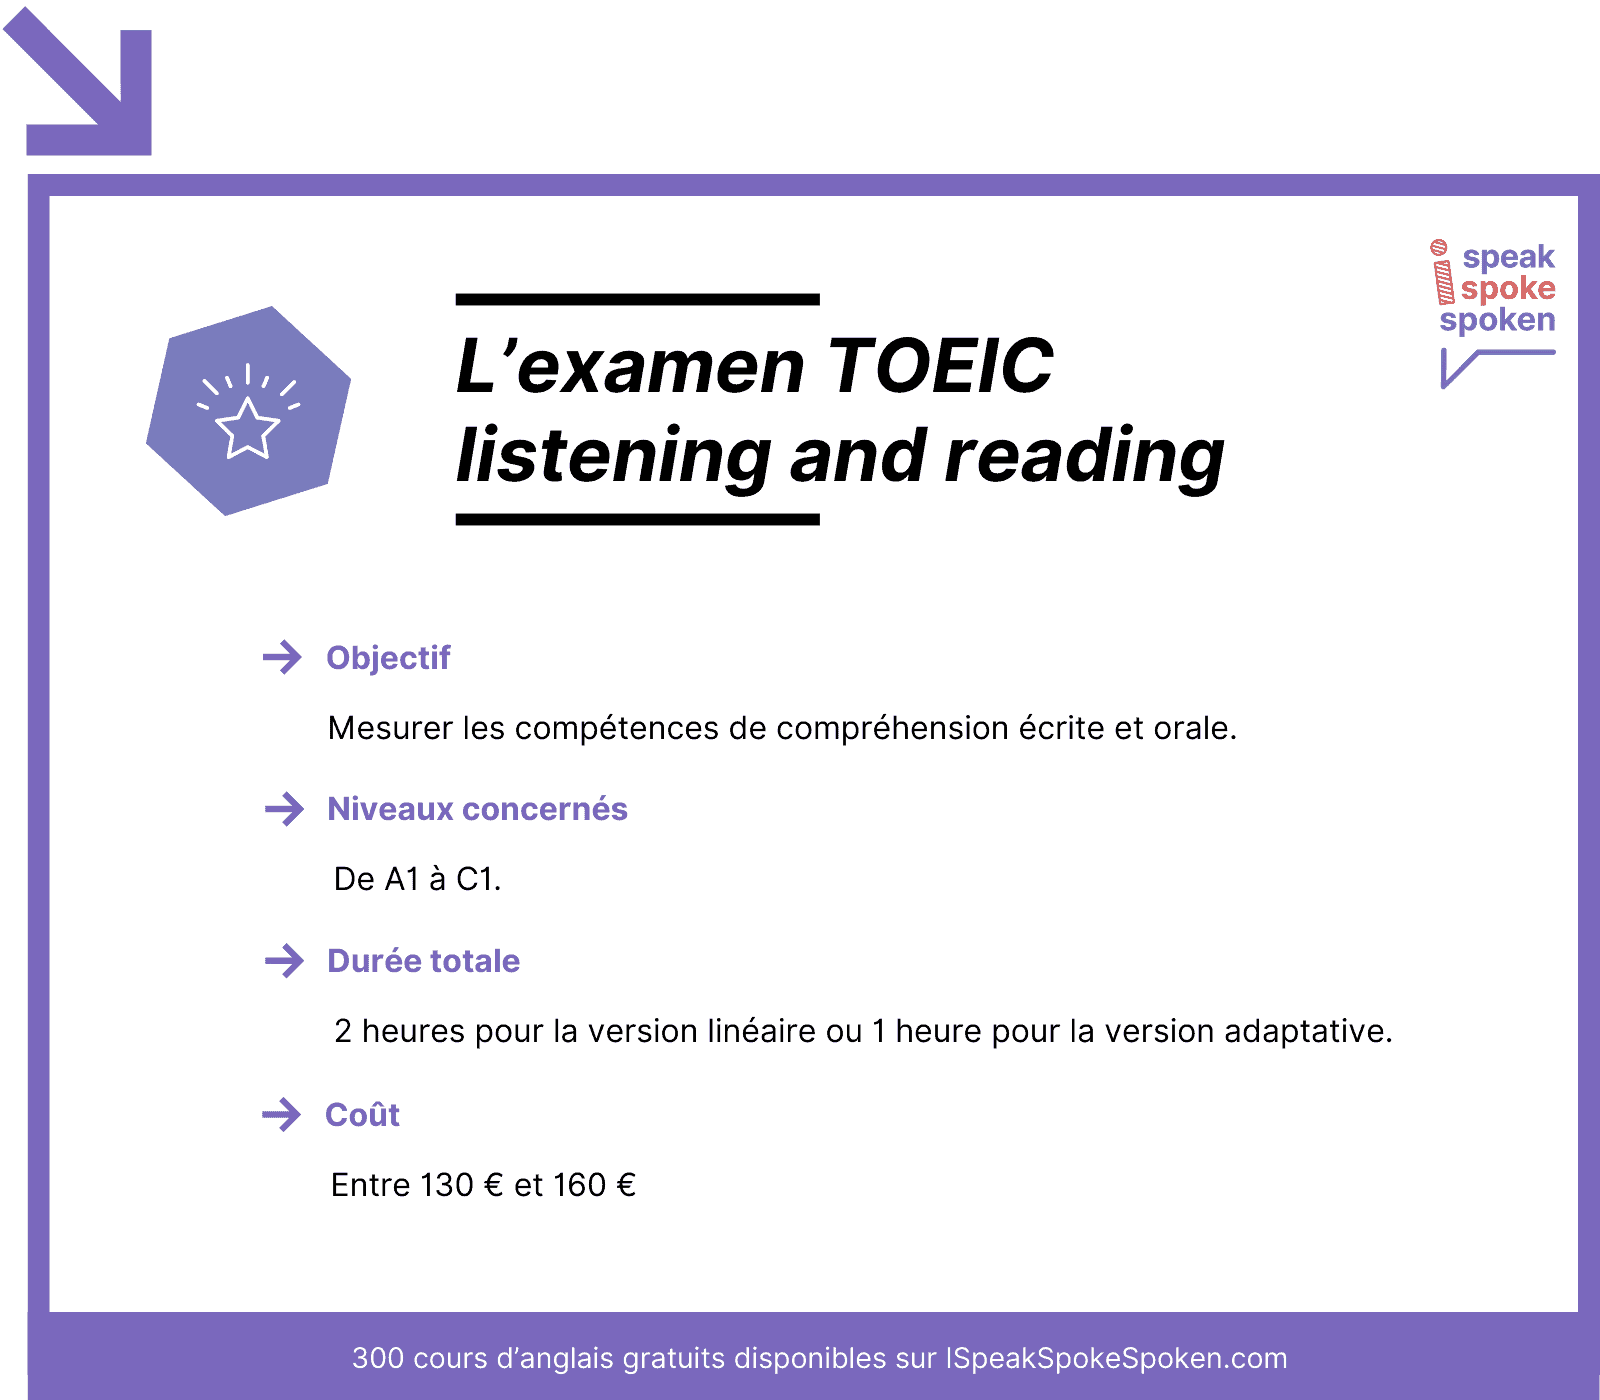 L'examen toeic listening and reading